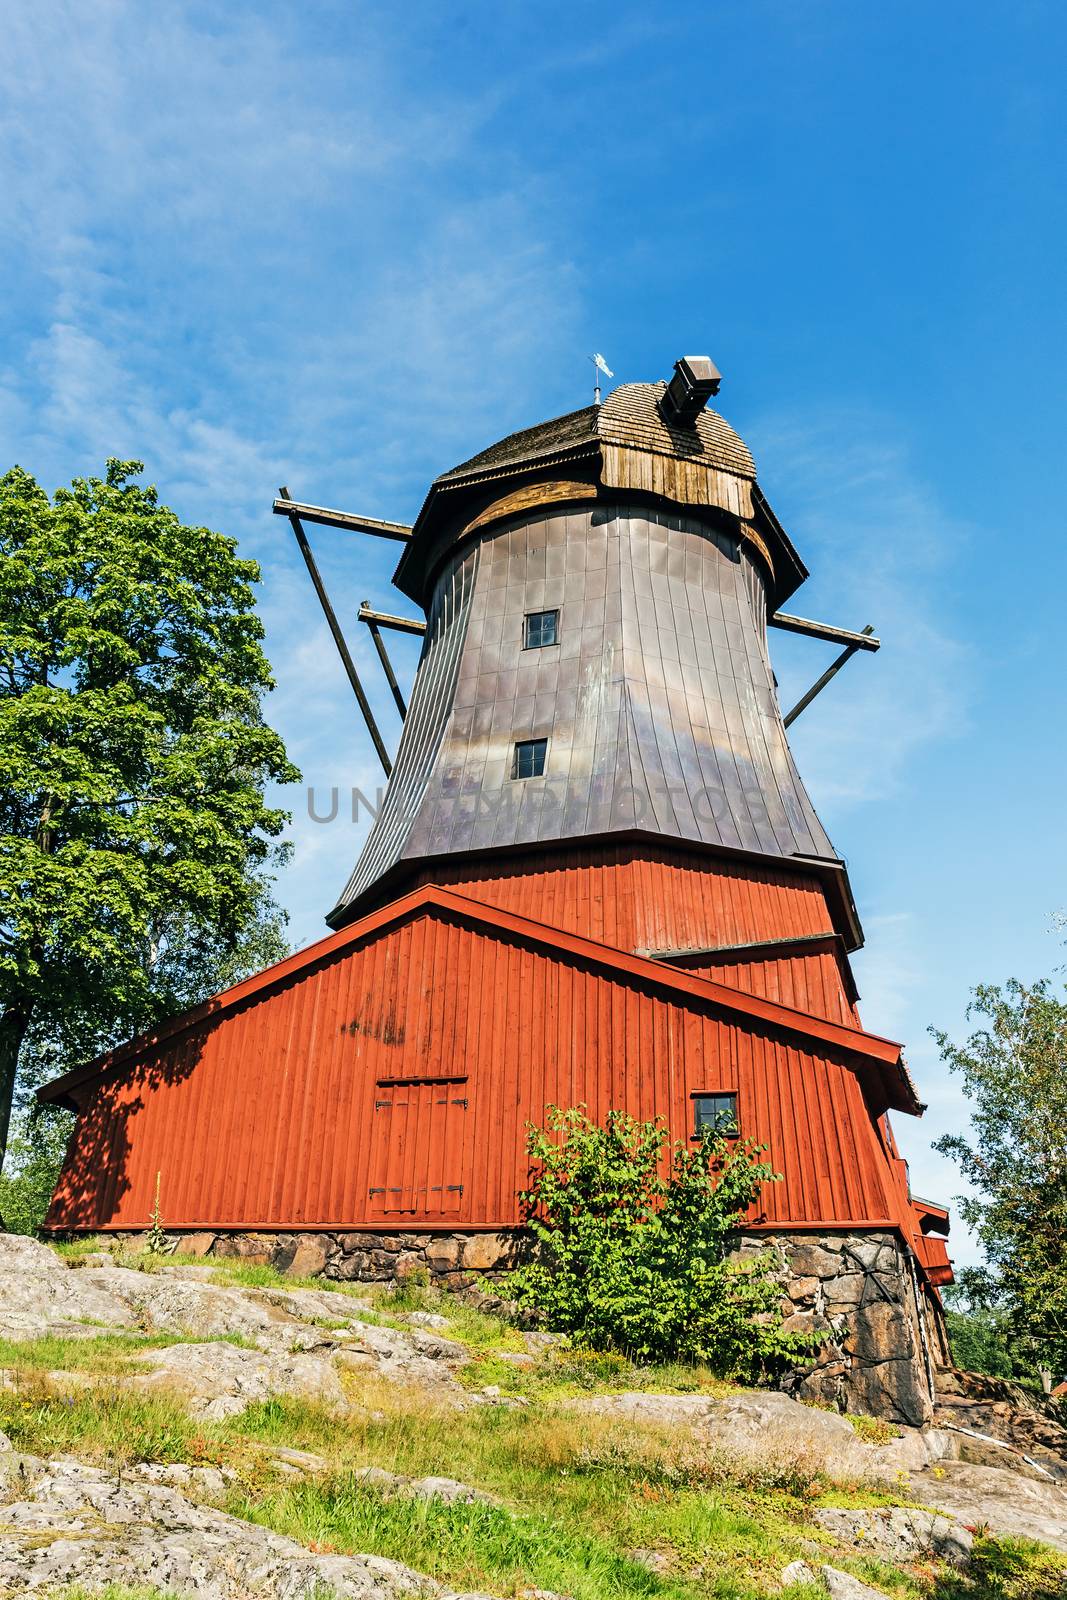 Dutch style ancient windmill built in 1785 on Djurgarden Island, Stockholm, Sweden.